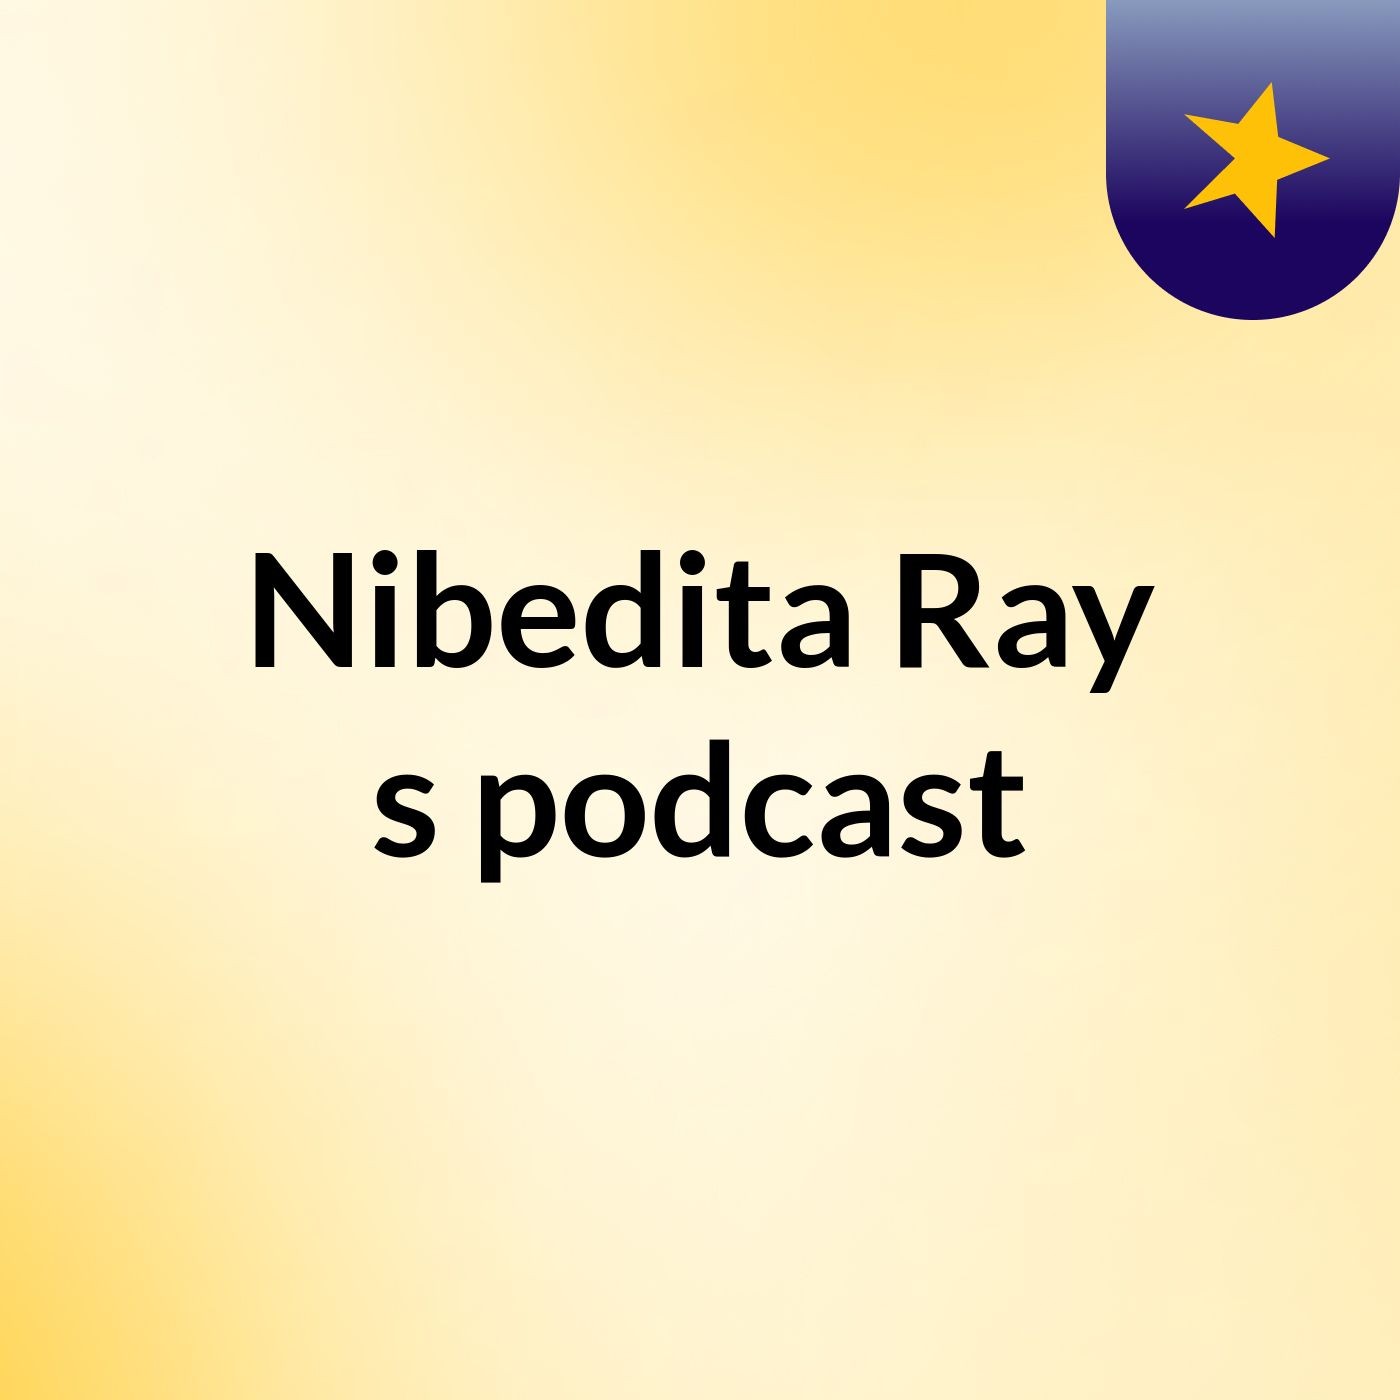 Episode 2 - Nibedita Ray's podcast